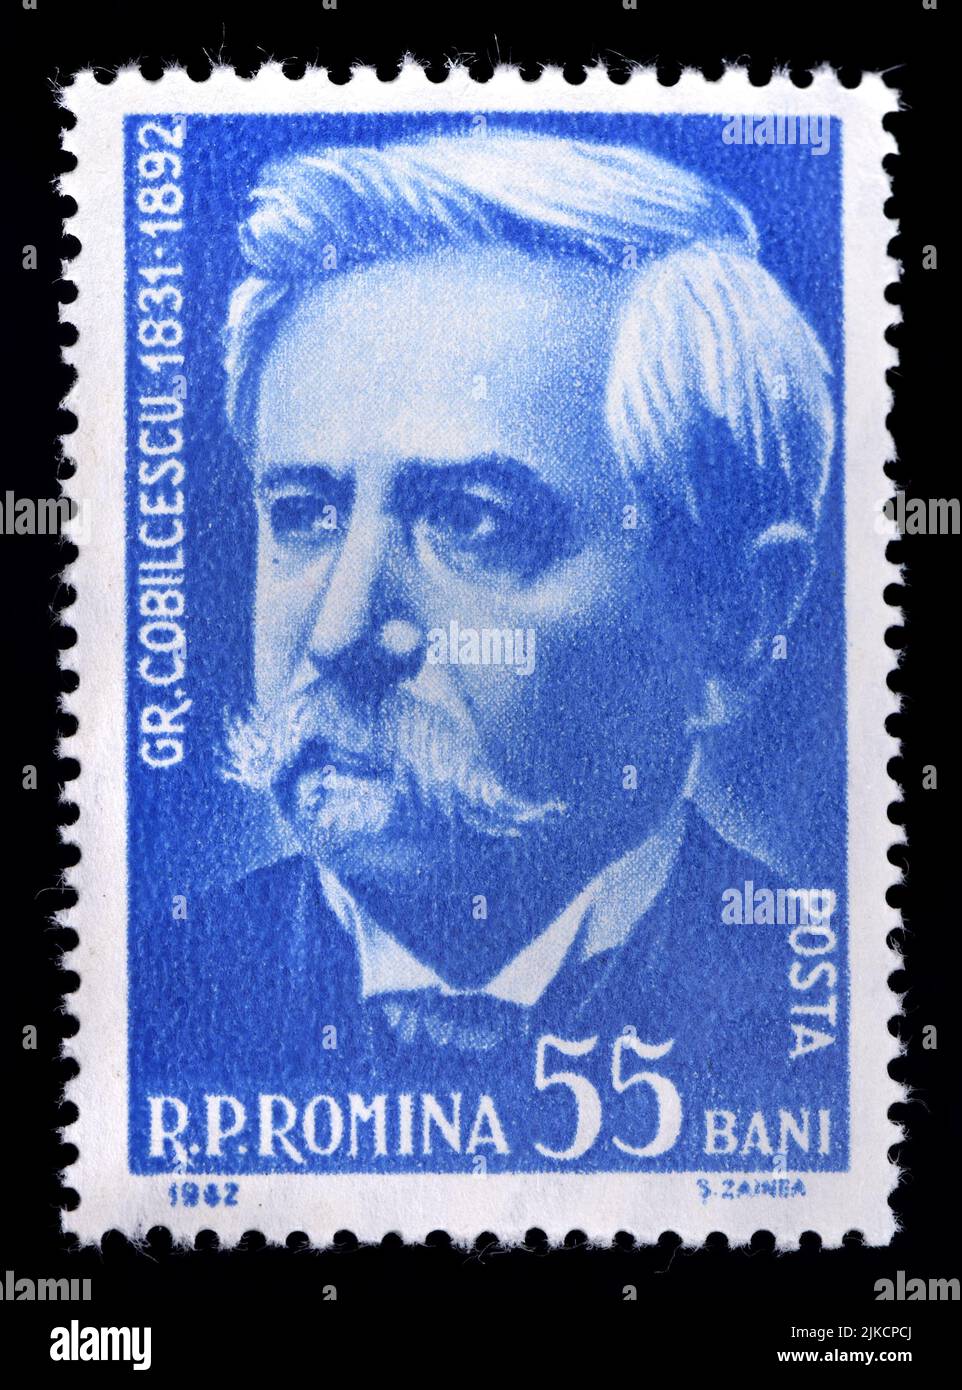 Sello de franqueo rumano (1962) : Grigore Cobălcescu (1831-1892) moldavo / Rumano geólogo y paleontólogo Foto de stock